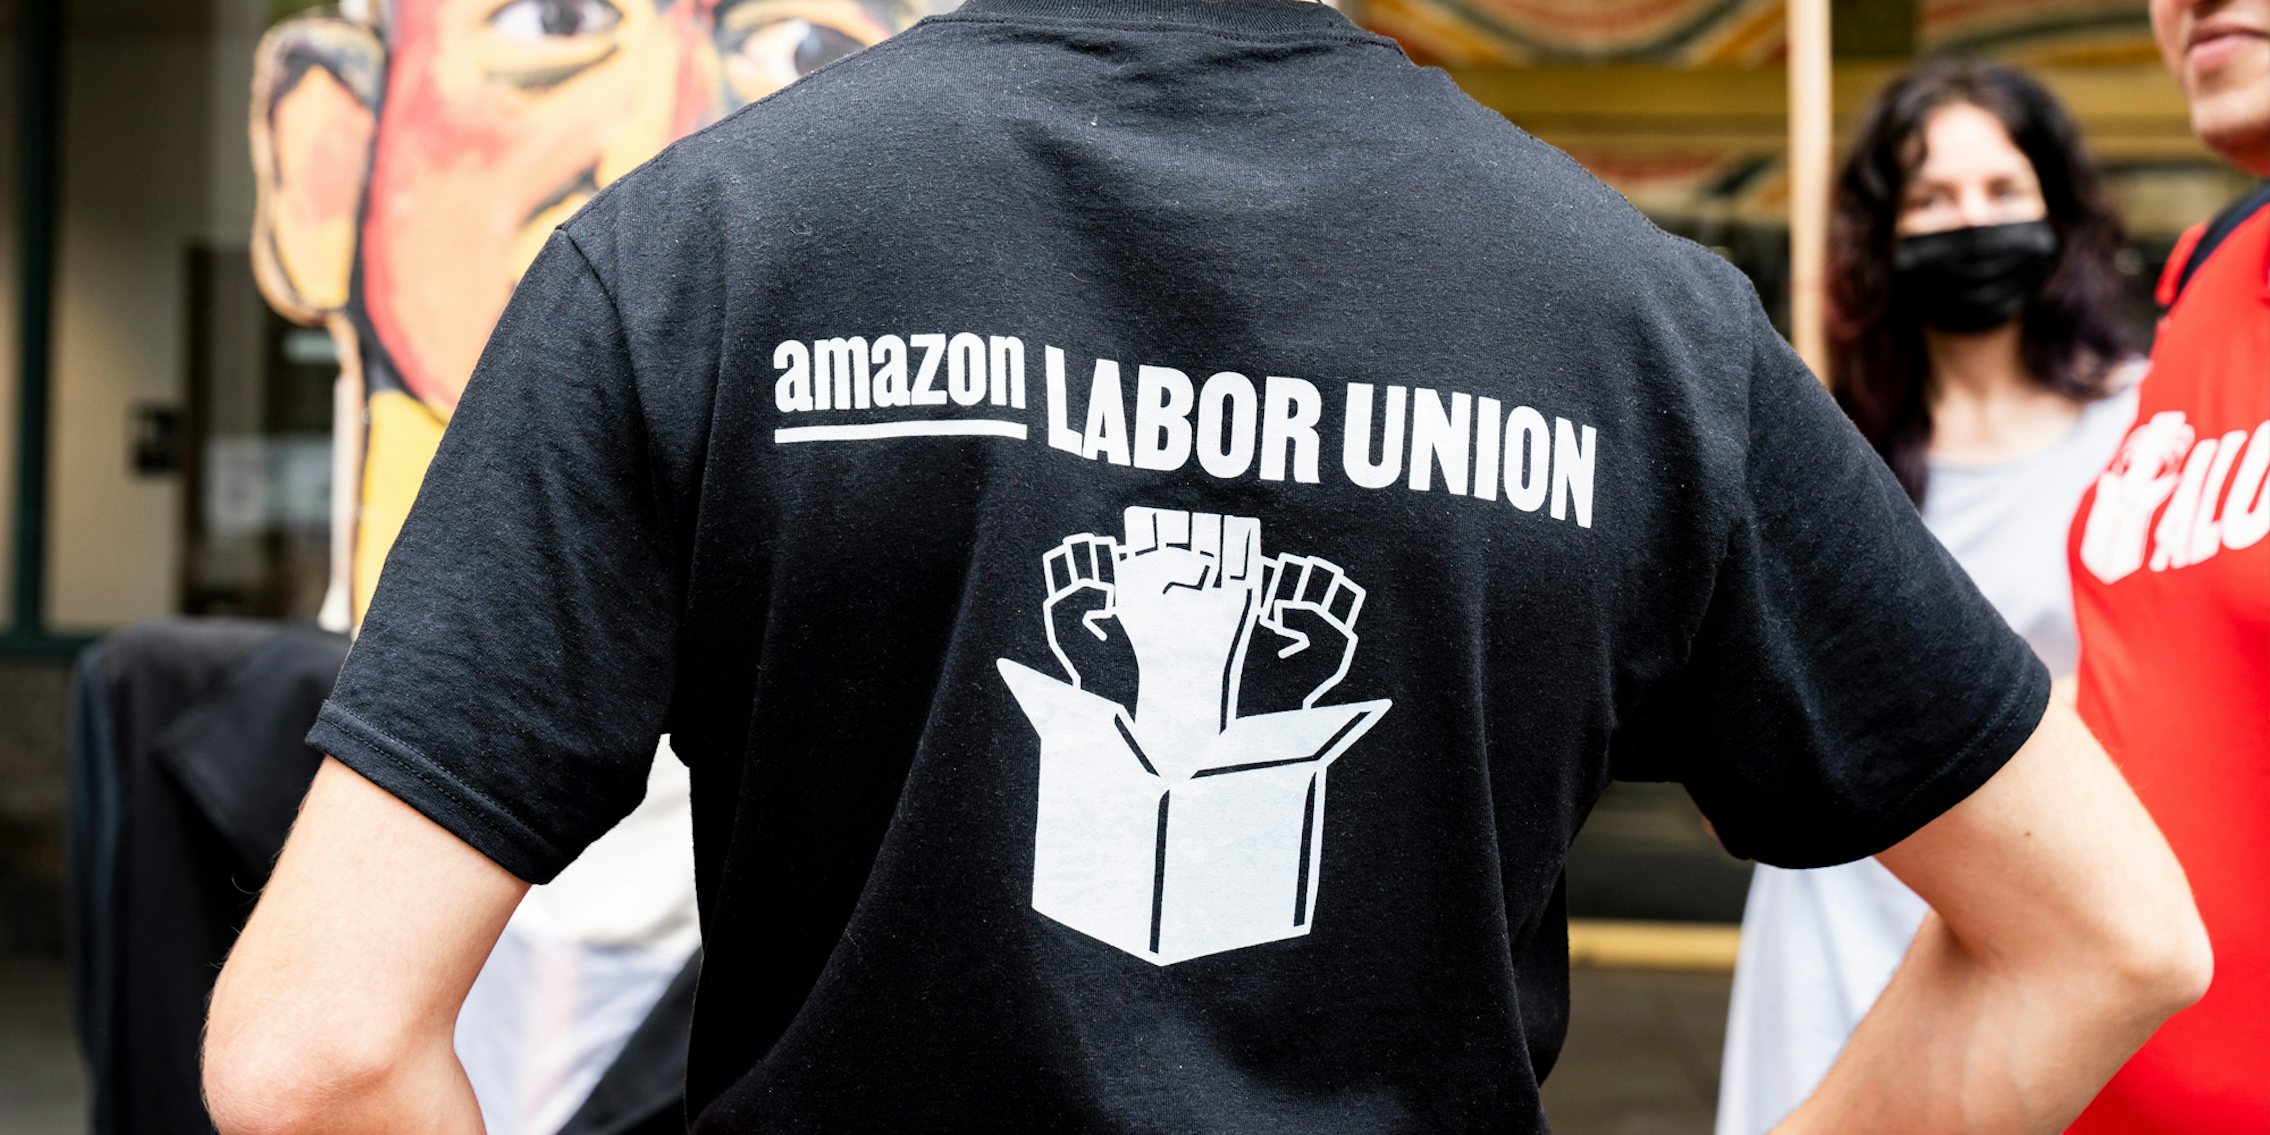 person wearing Amazon Labor Union shirt